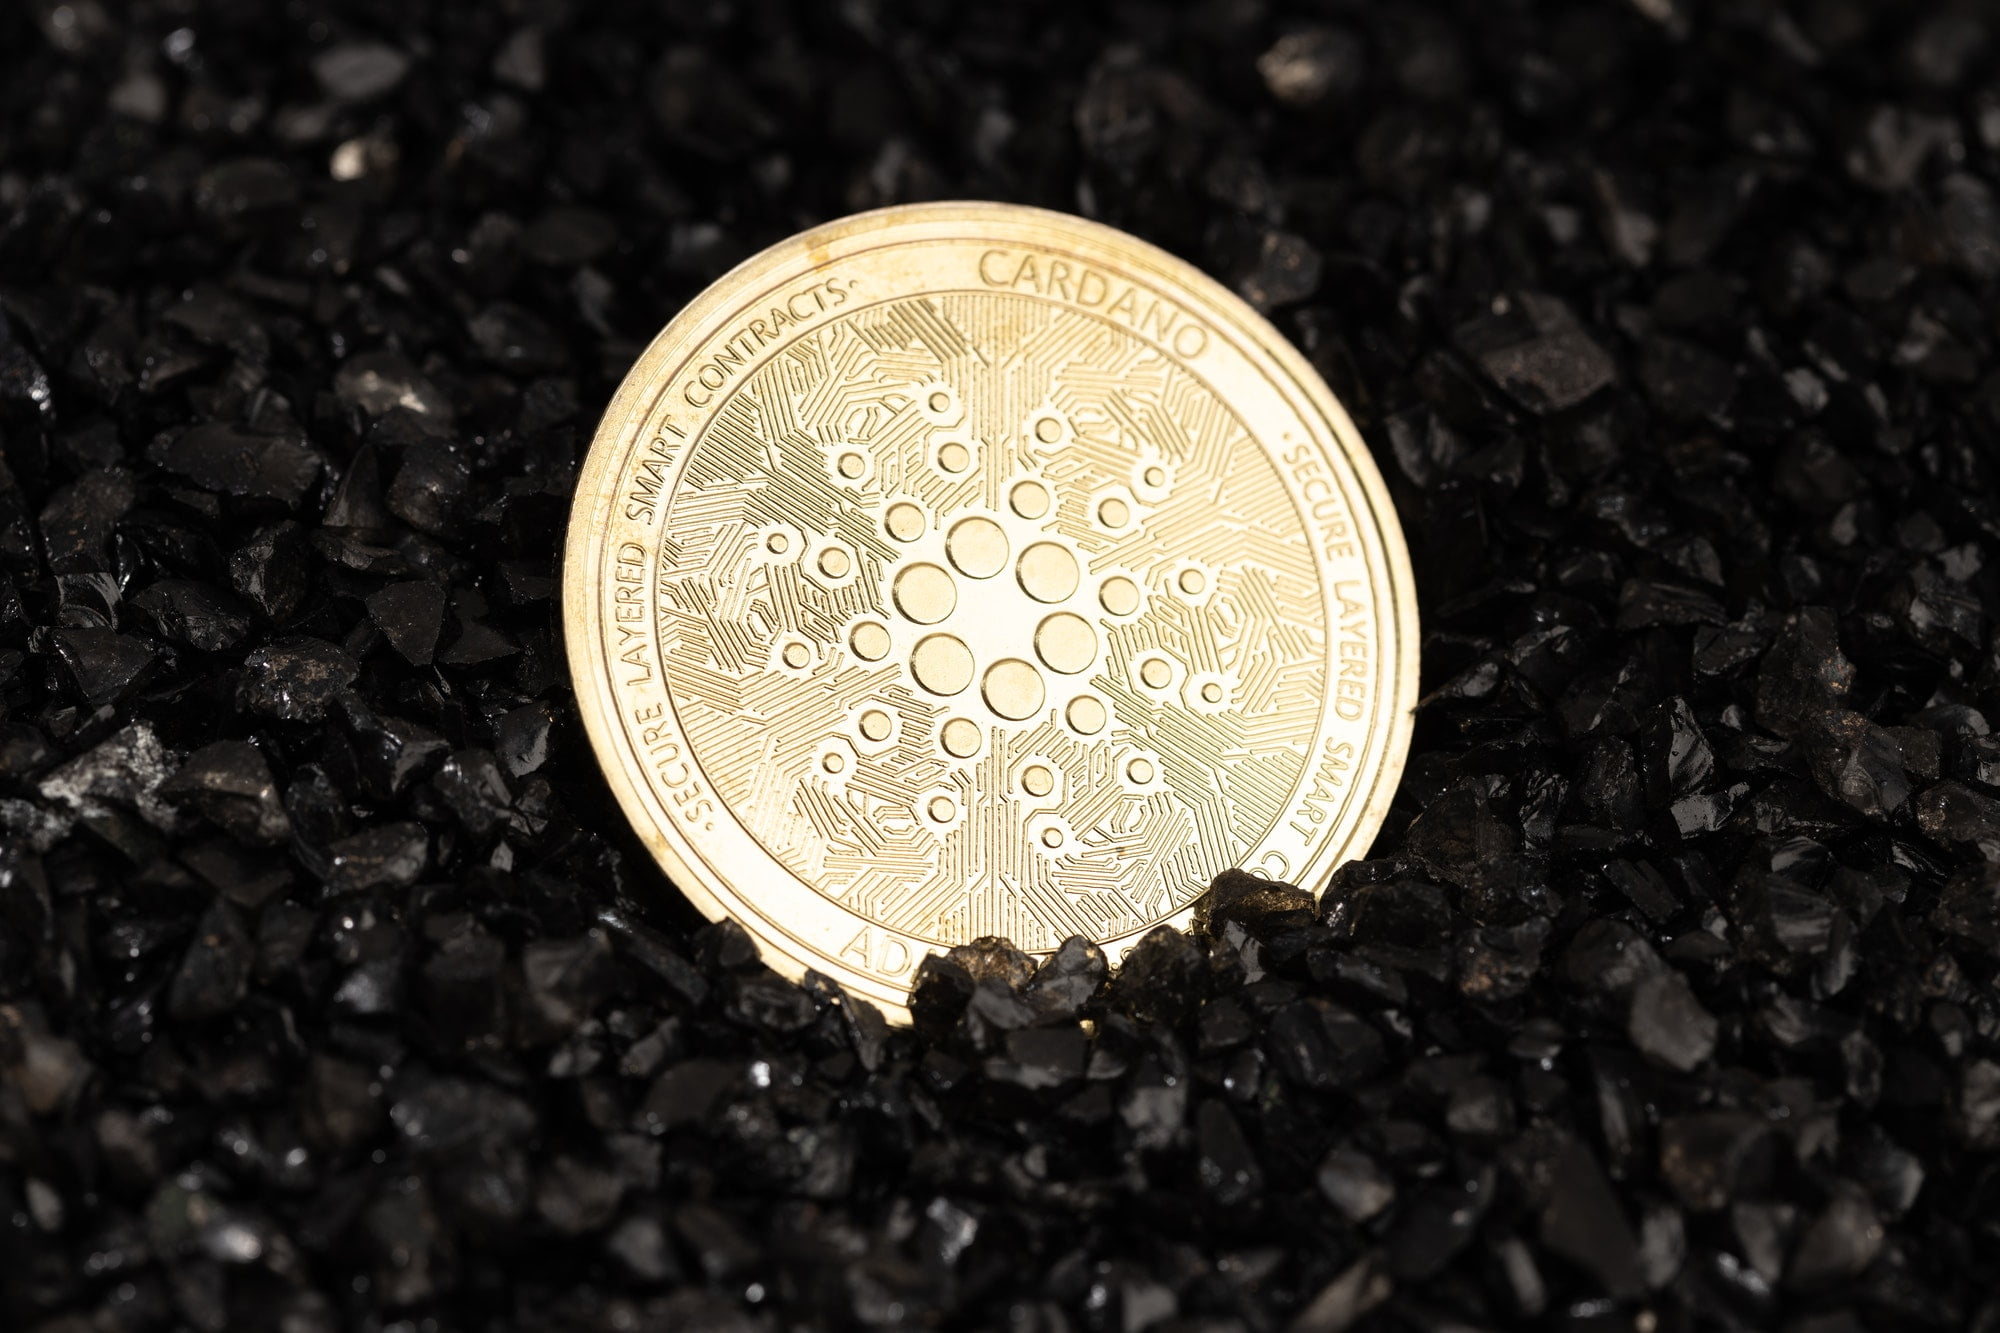 Cardano coin on black gravel background